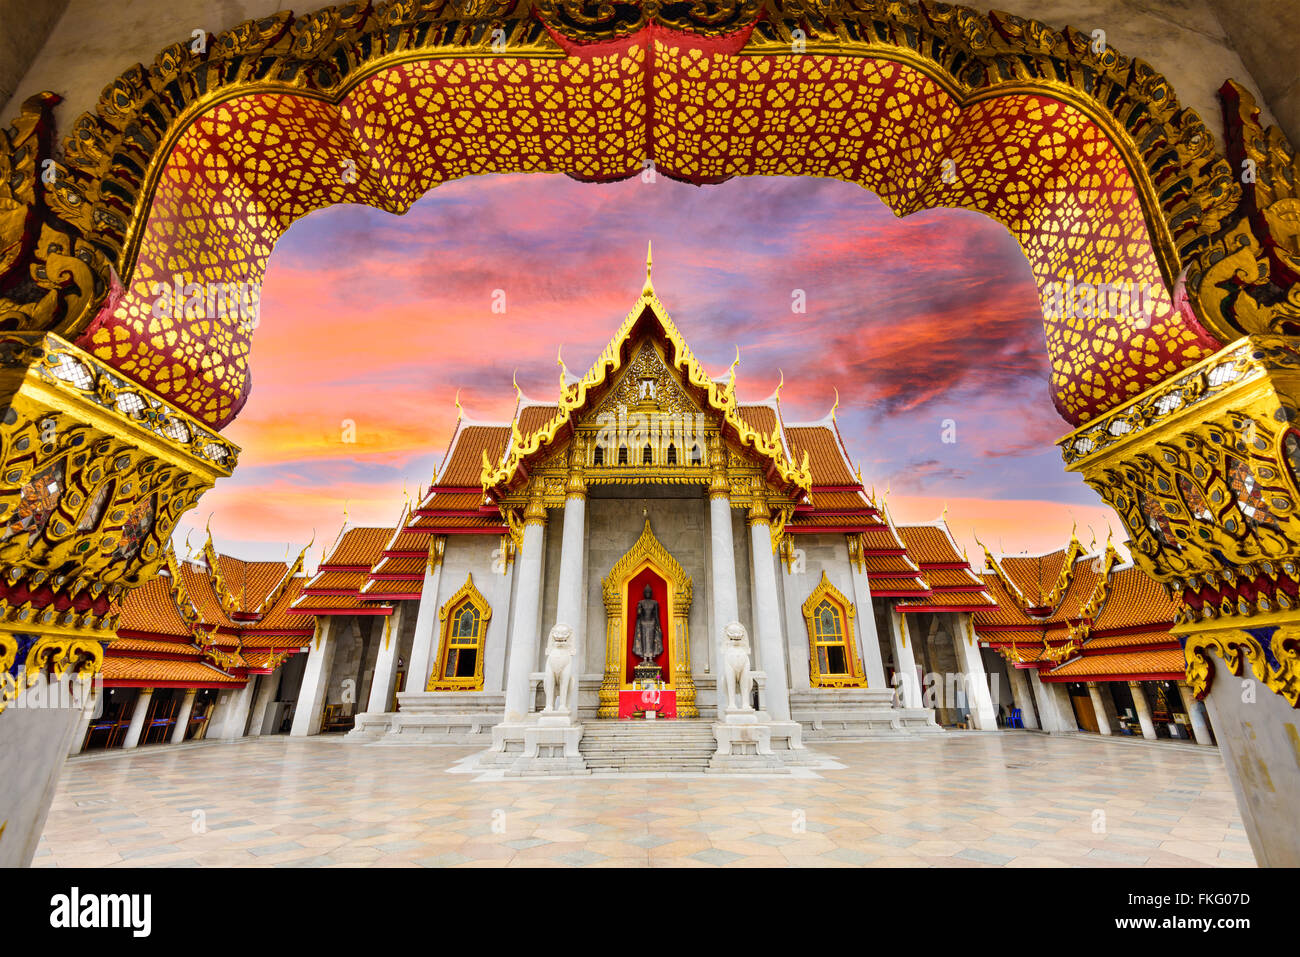 Marble Temple of Bangkok, Thailand. Stock Photo